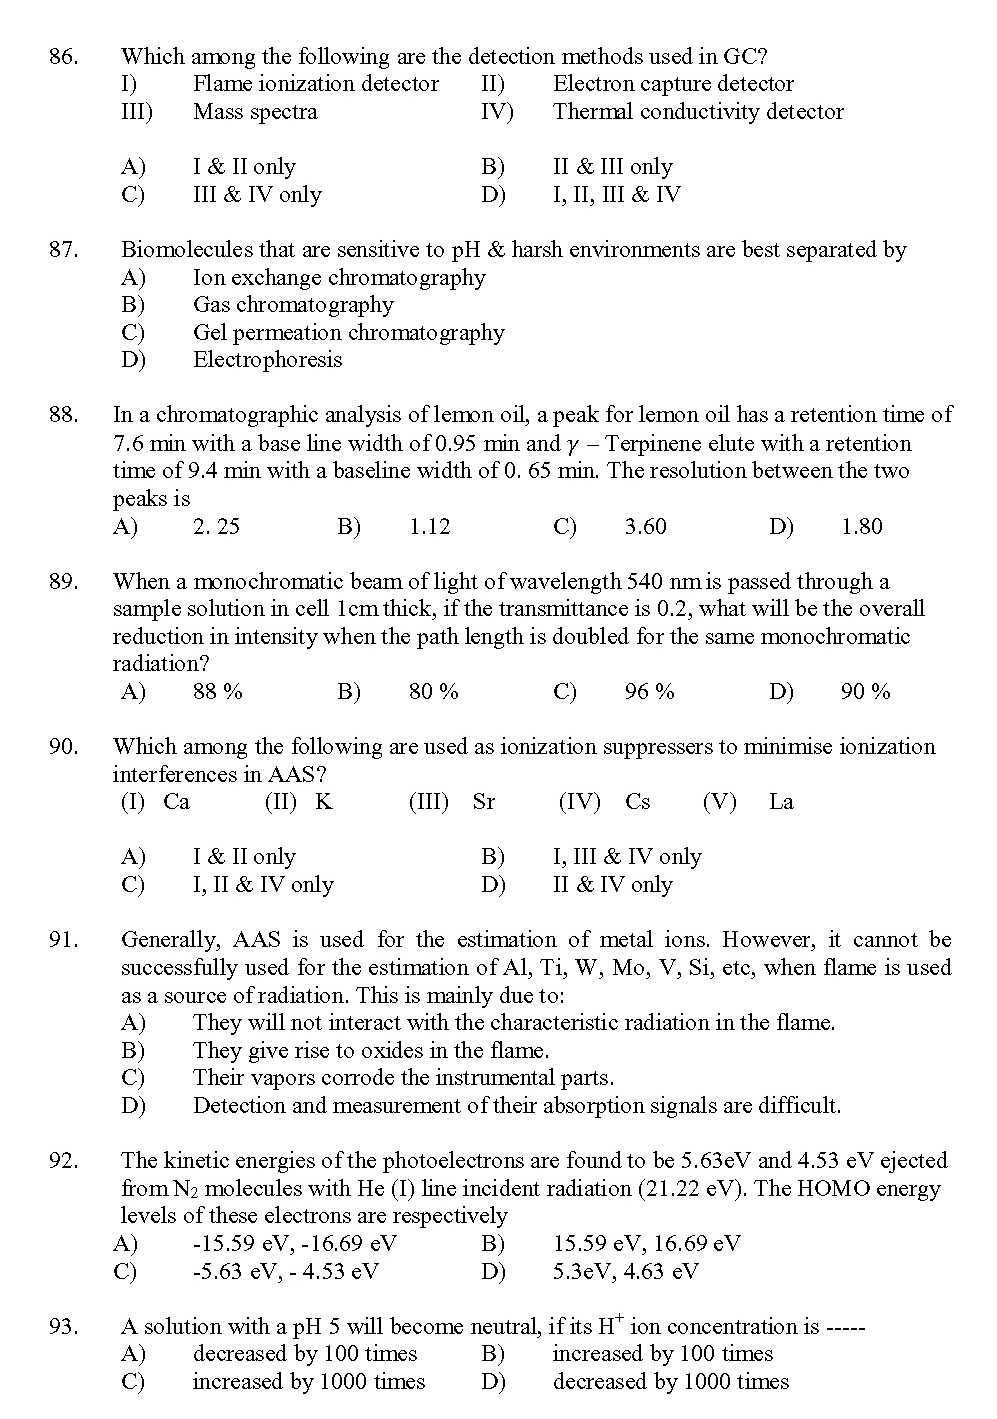 Kerala SET Chemistry Exam 2017 Question Code 17204 A 13